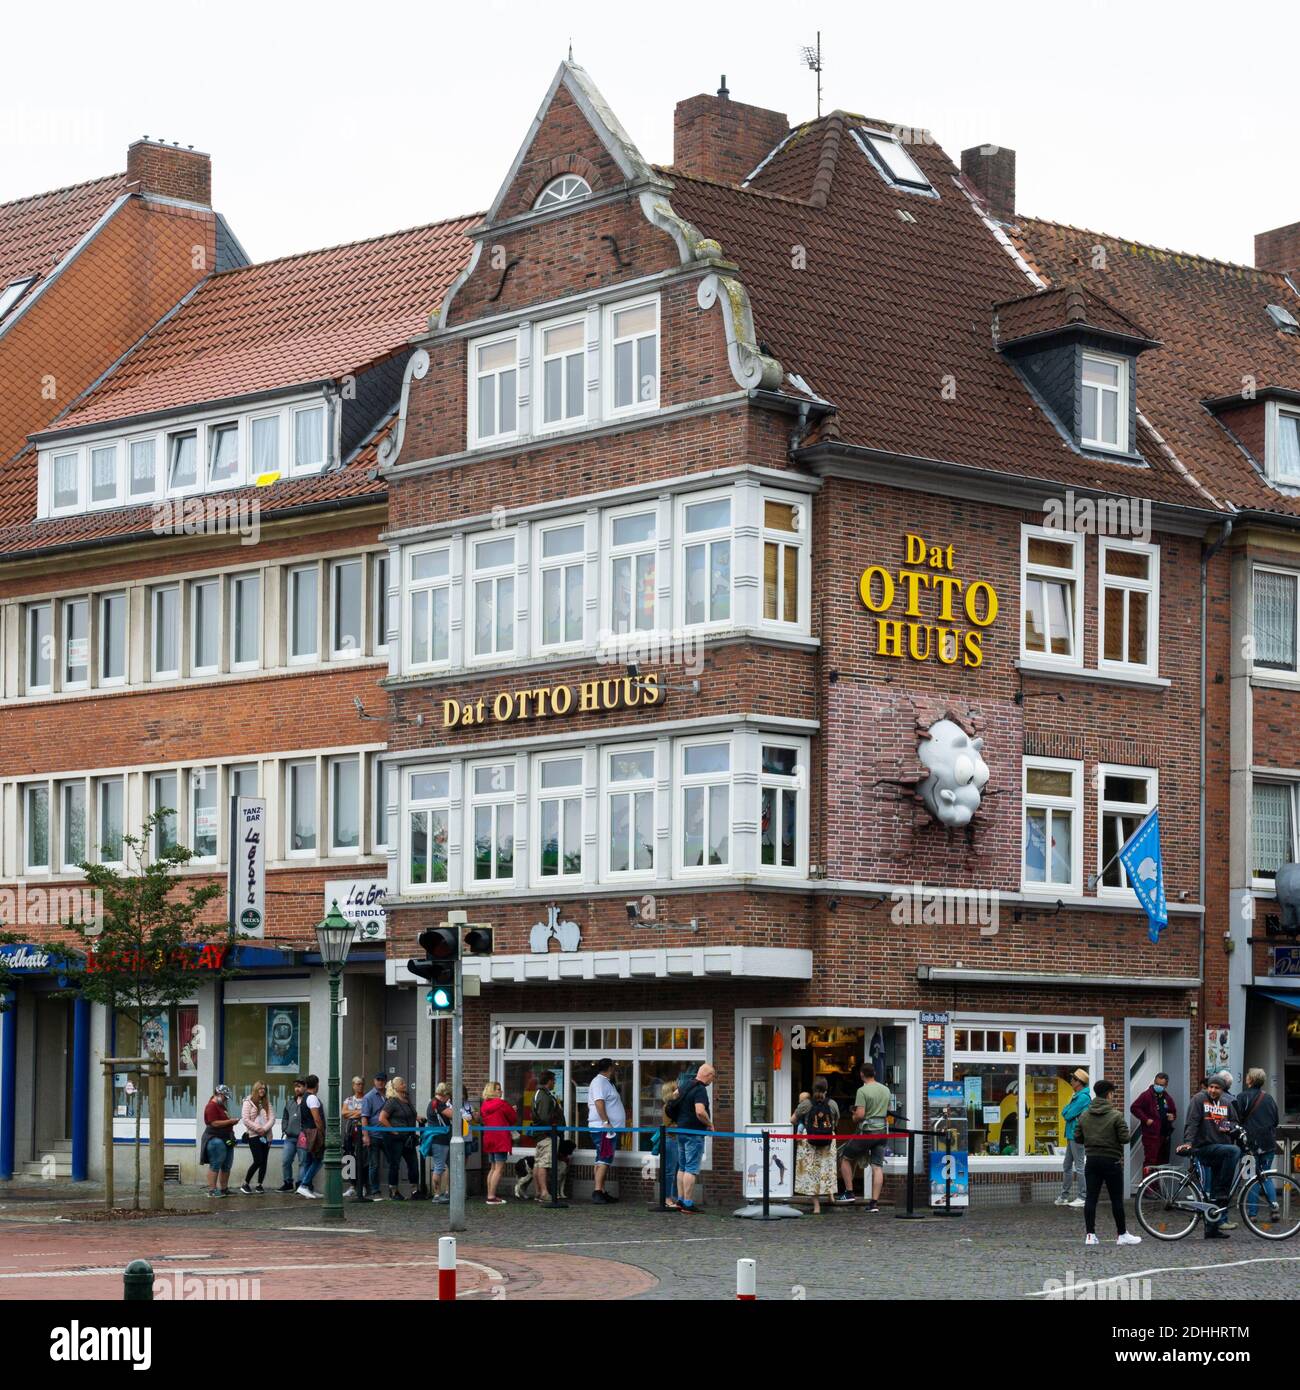 Dat OTTO HUUS, Emden, East Frisian, Lower Saxony, Germany, Europe Stock Photo